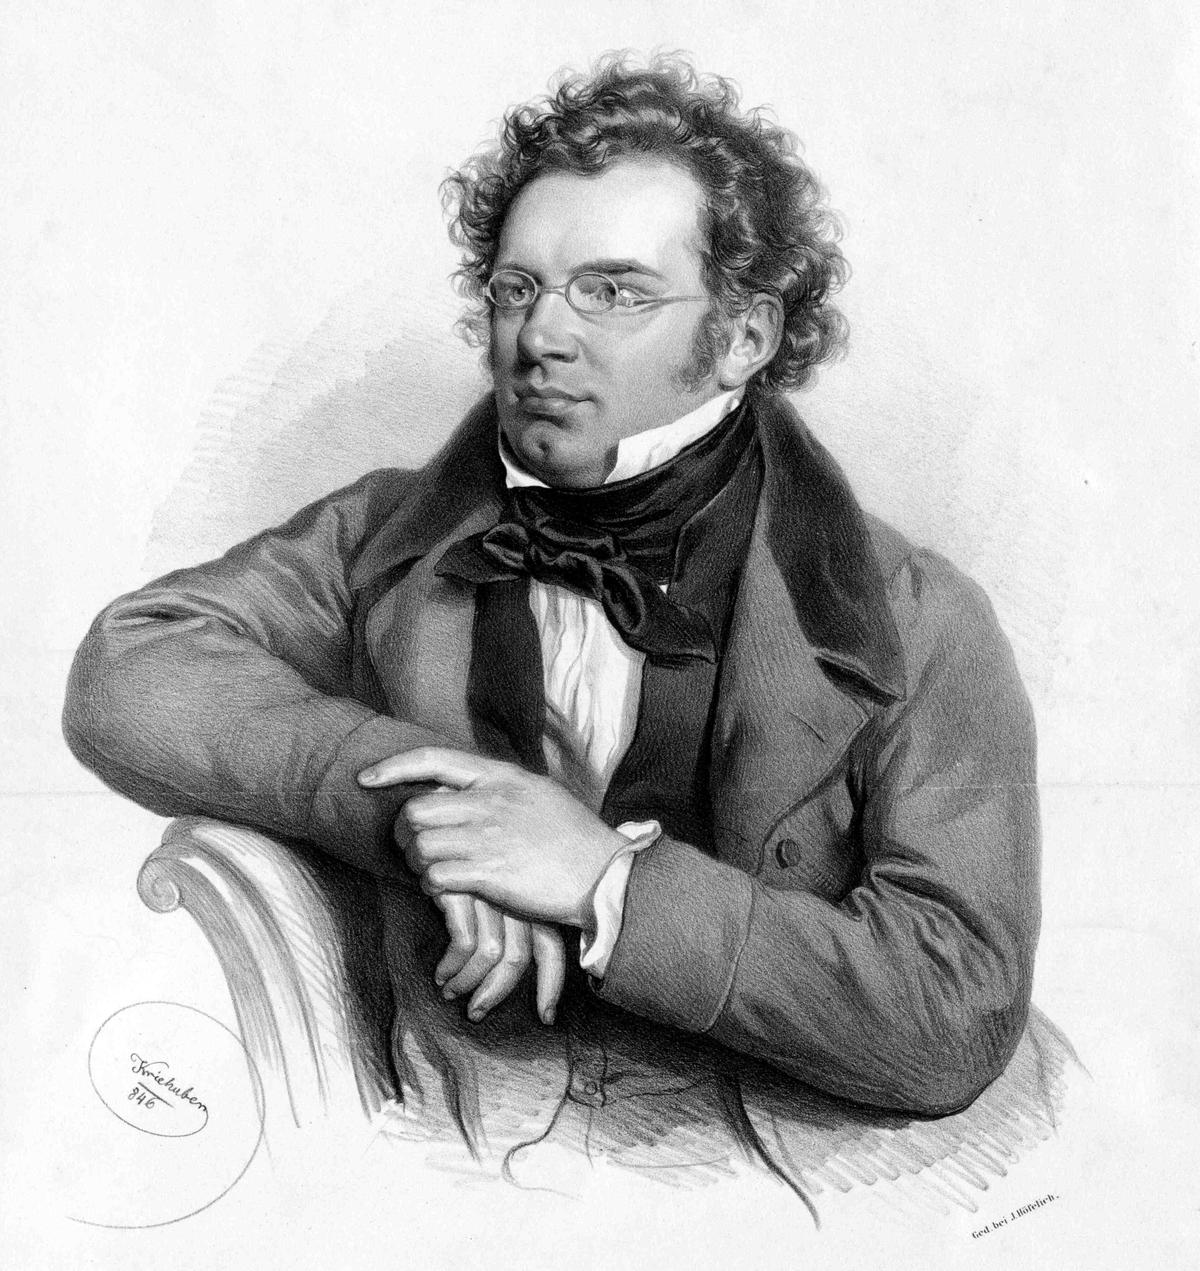 Portrait of Franz Schubert, 1846, by Josef Kriehuber. (Public Domain)